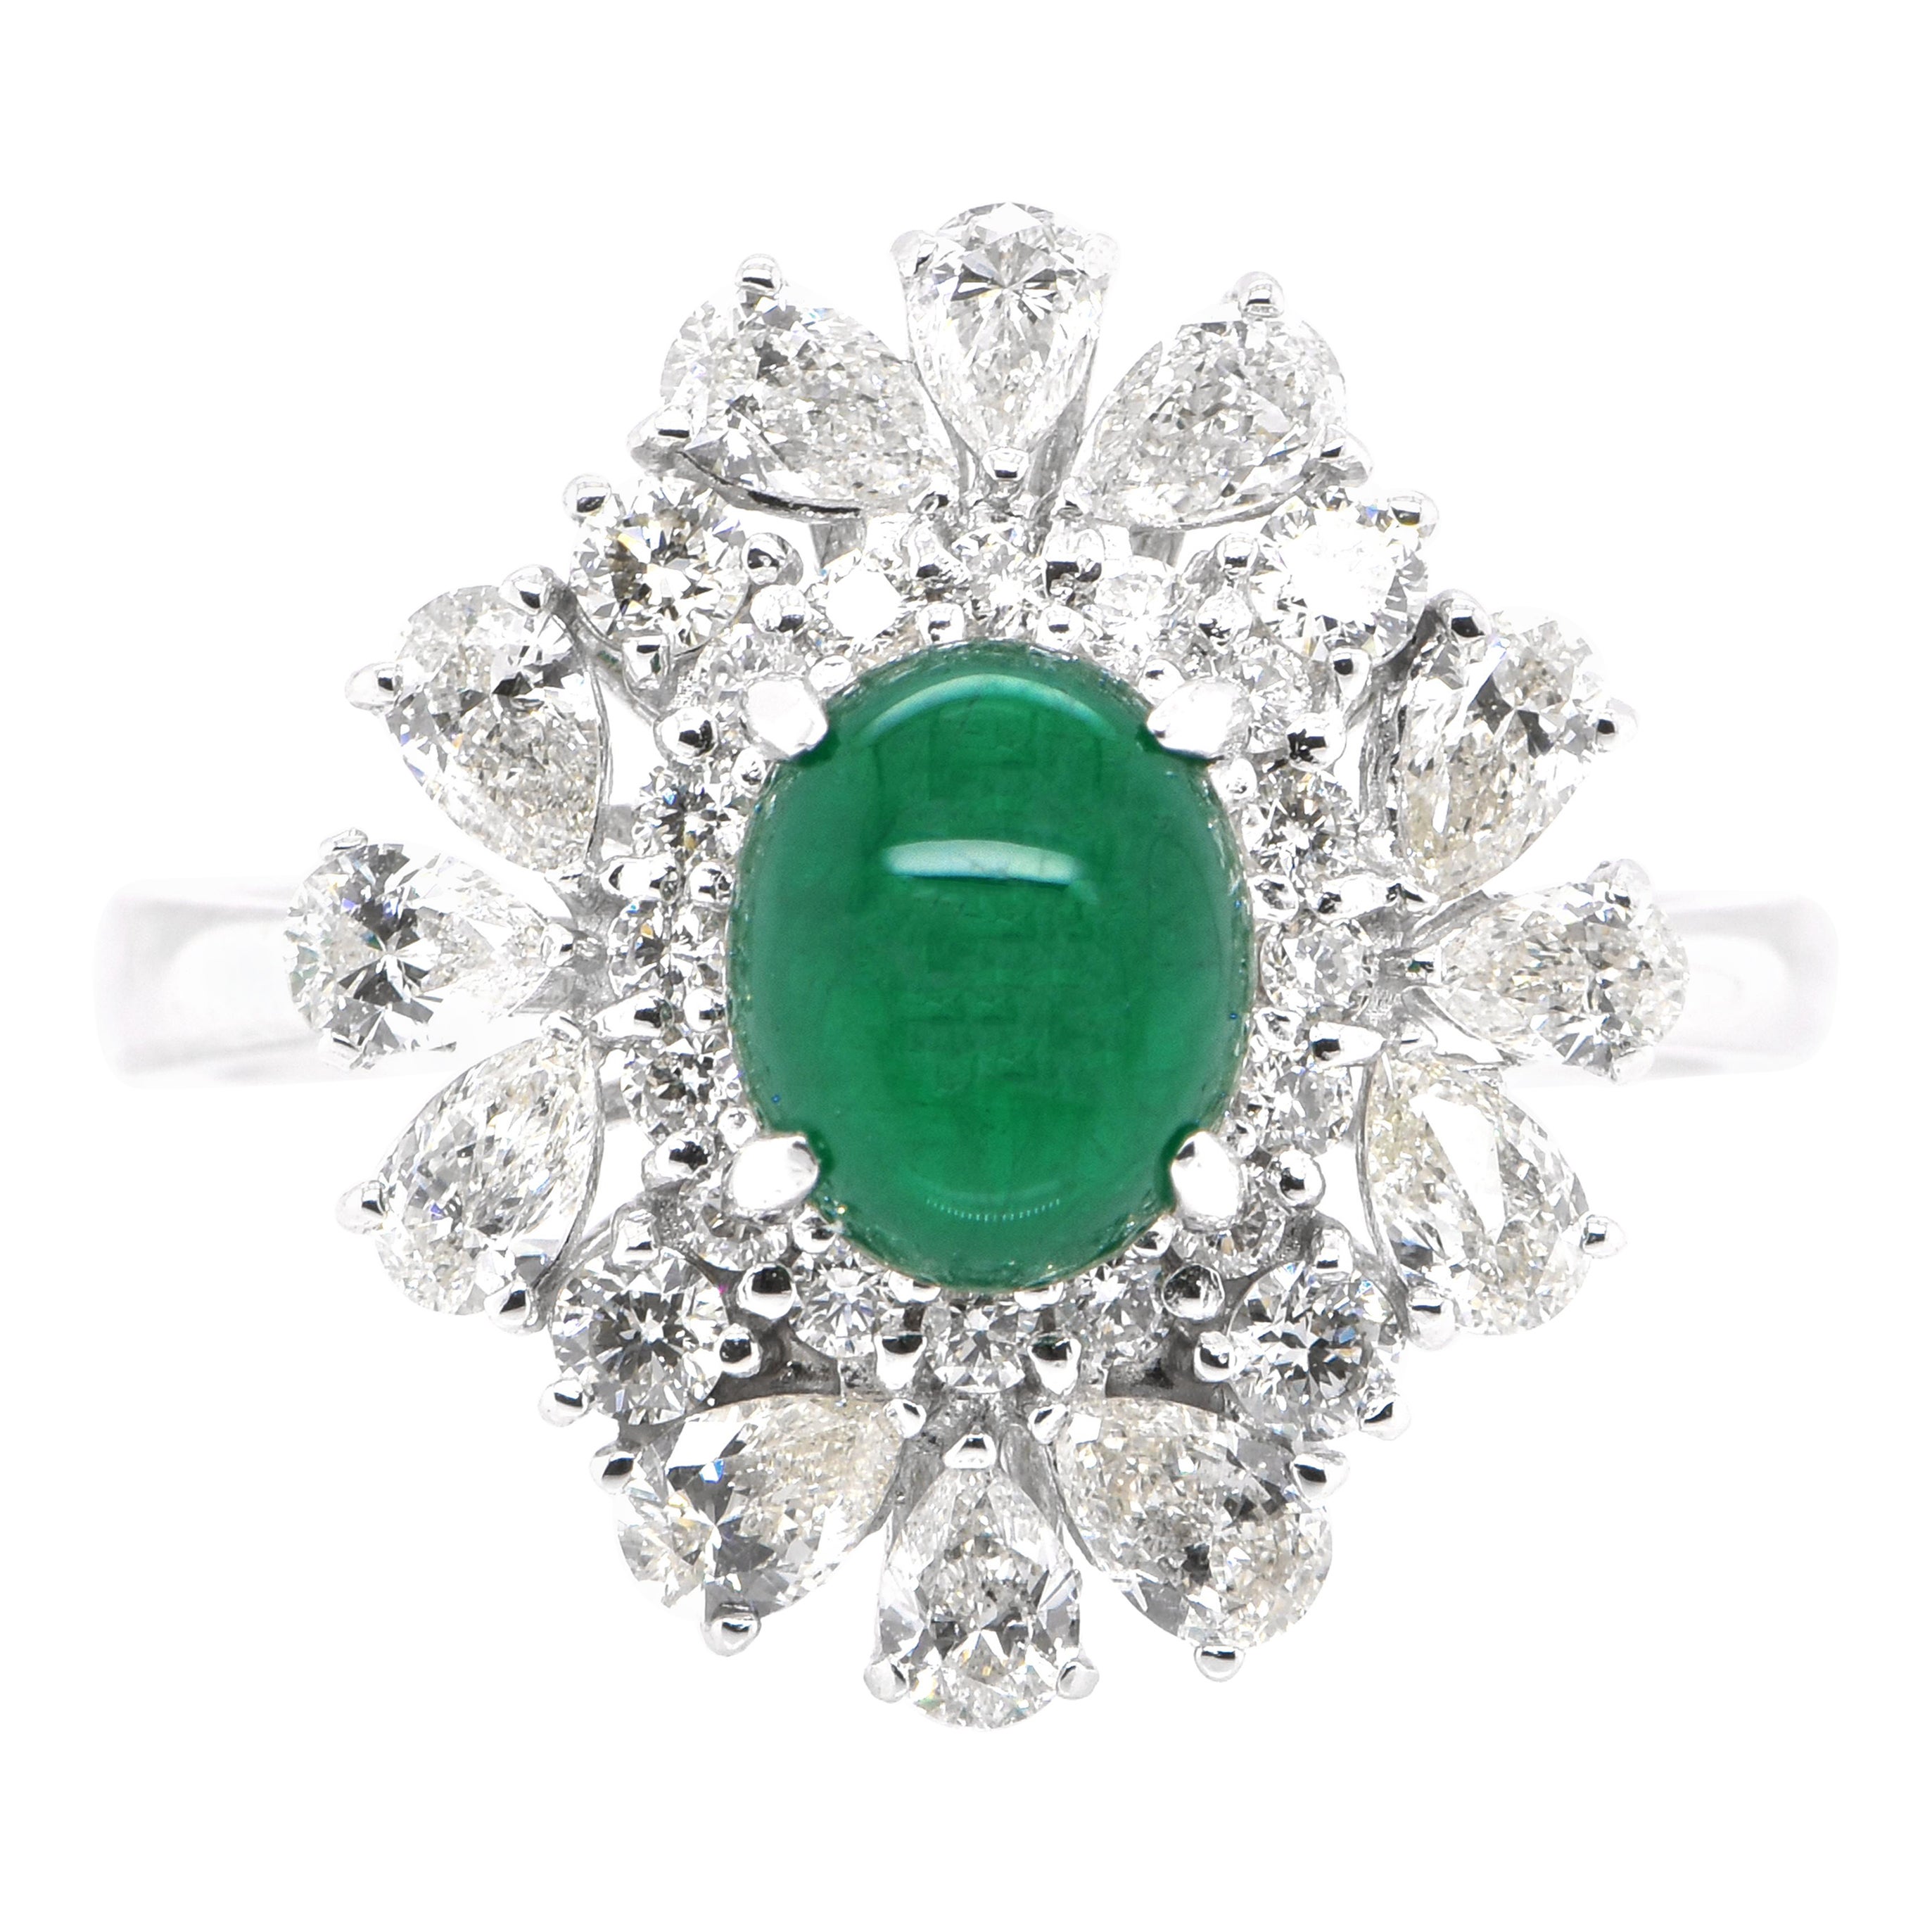 1.13 Carat Natural Emerald Cabochon and Diamond Ring Set in Platinum